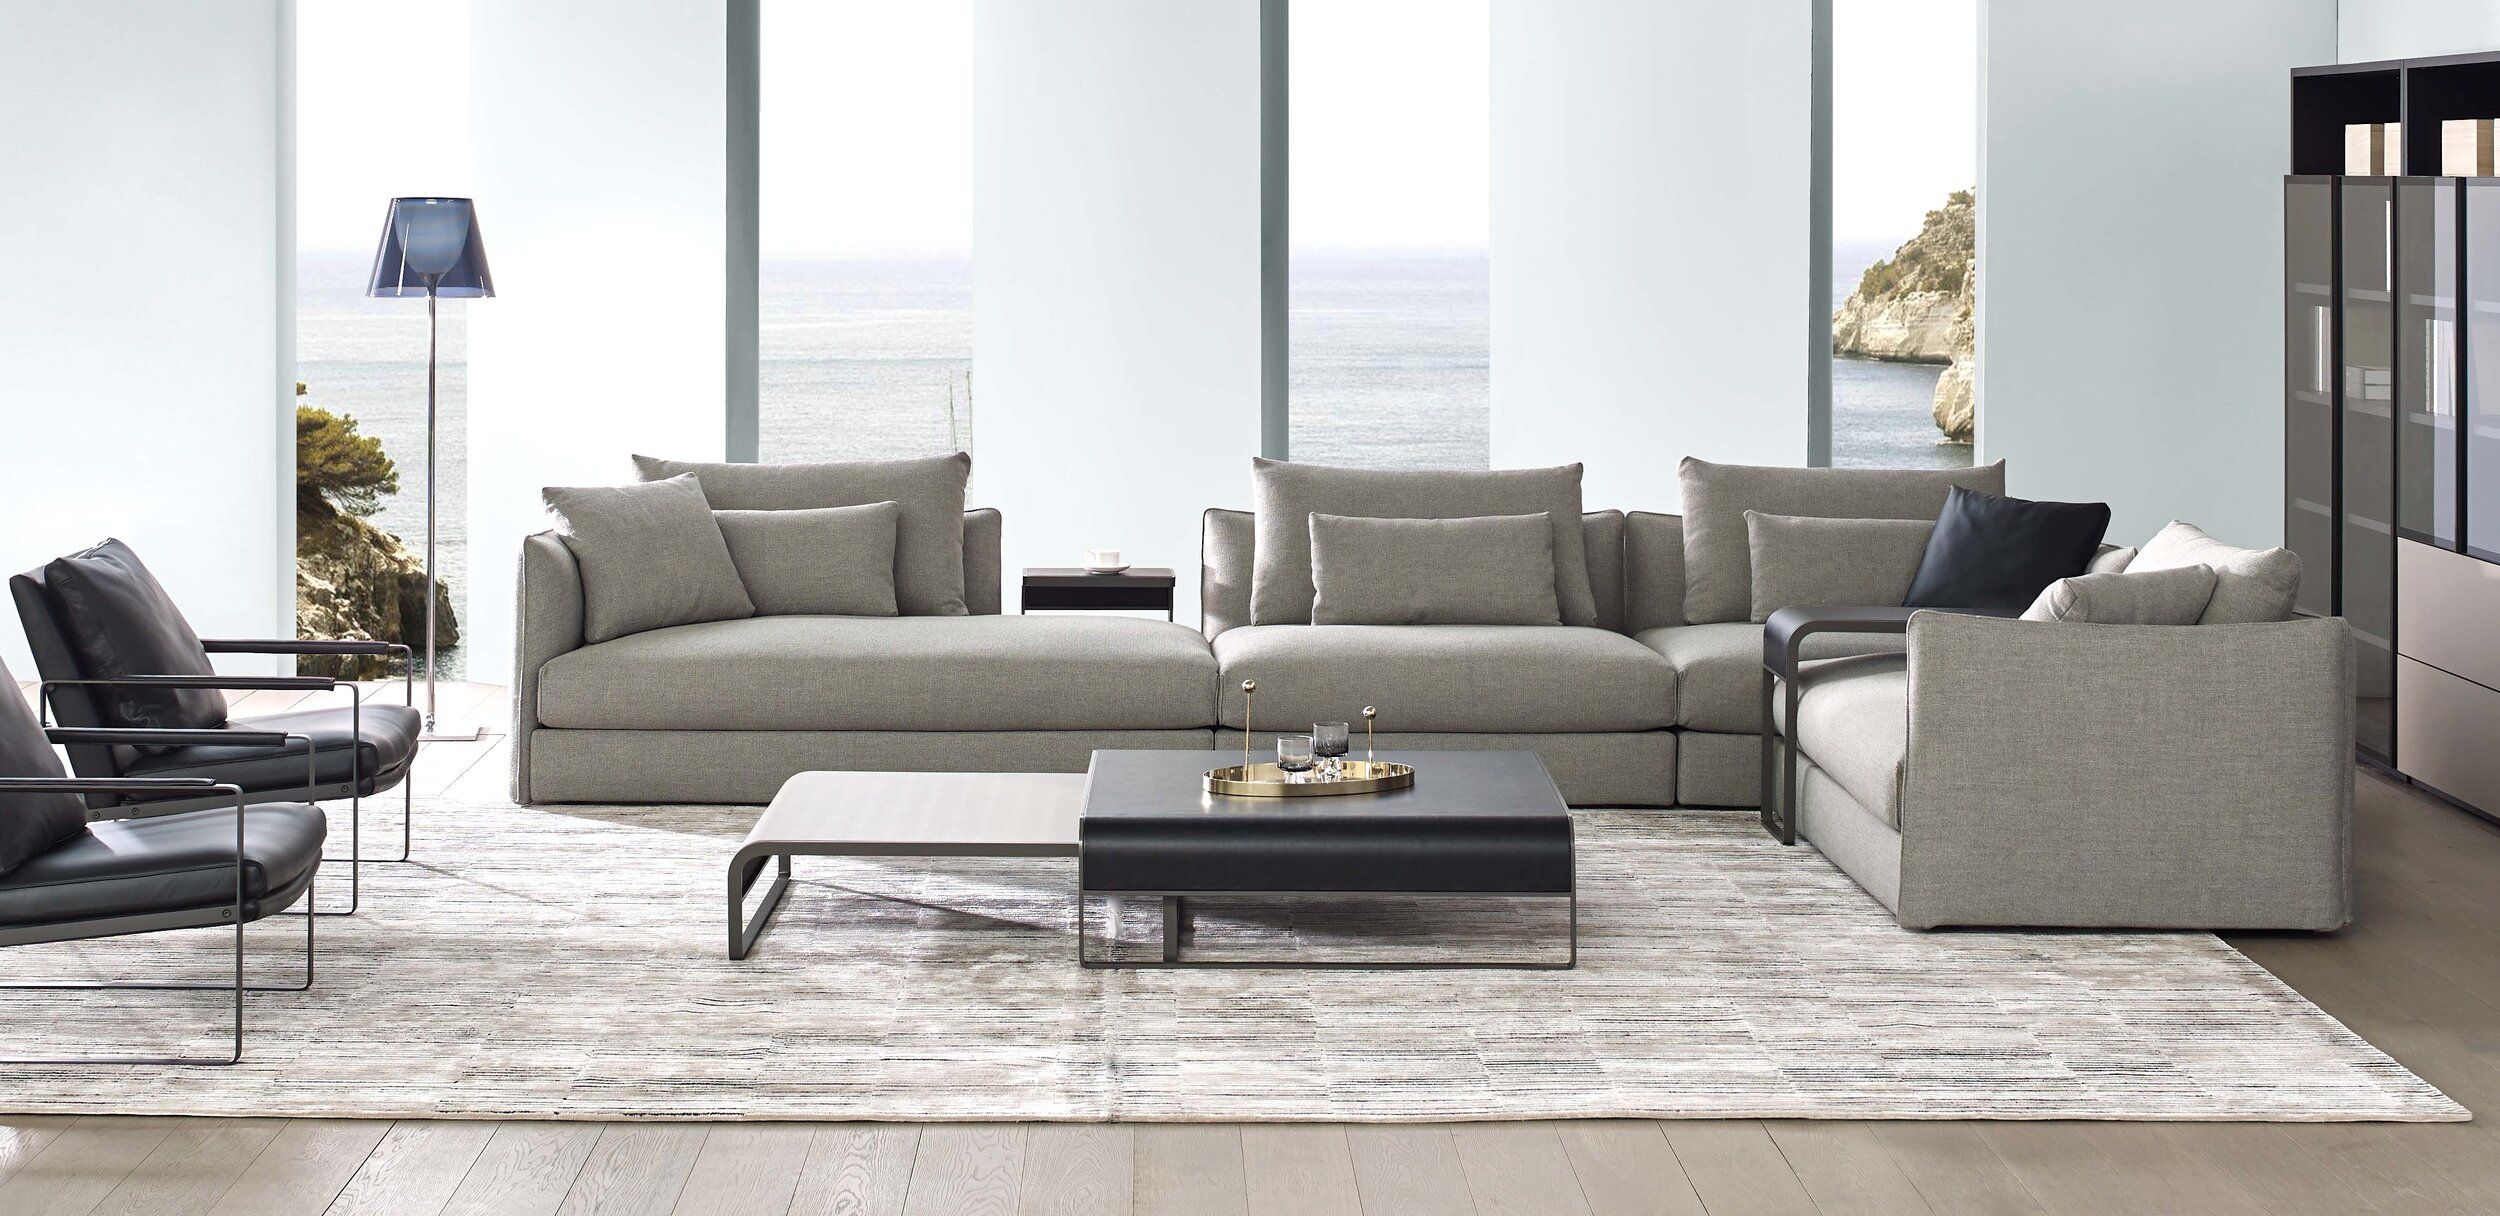 RM Living Cincinnati Contemporary Interior Furniture Design by Camerich